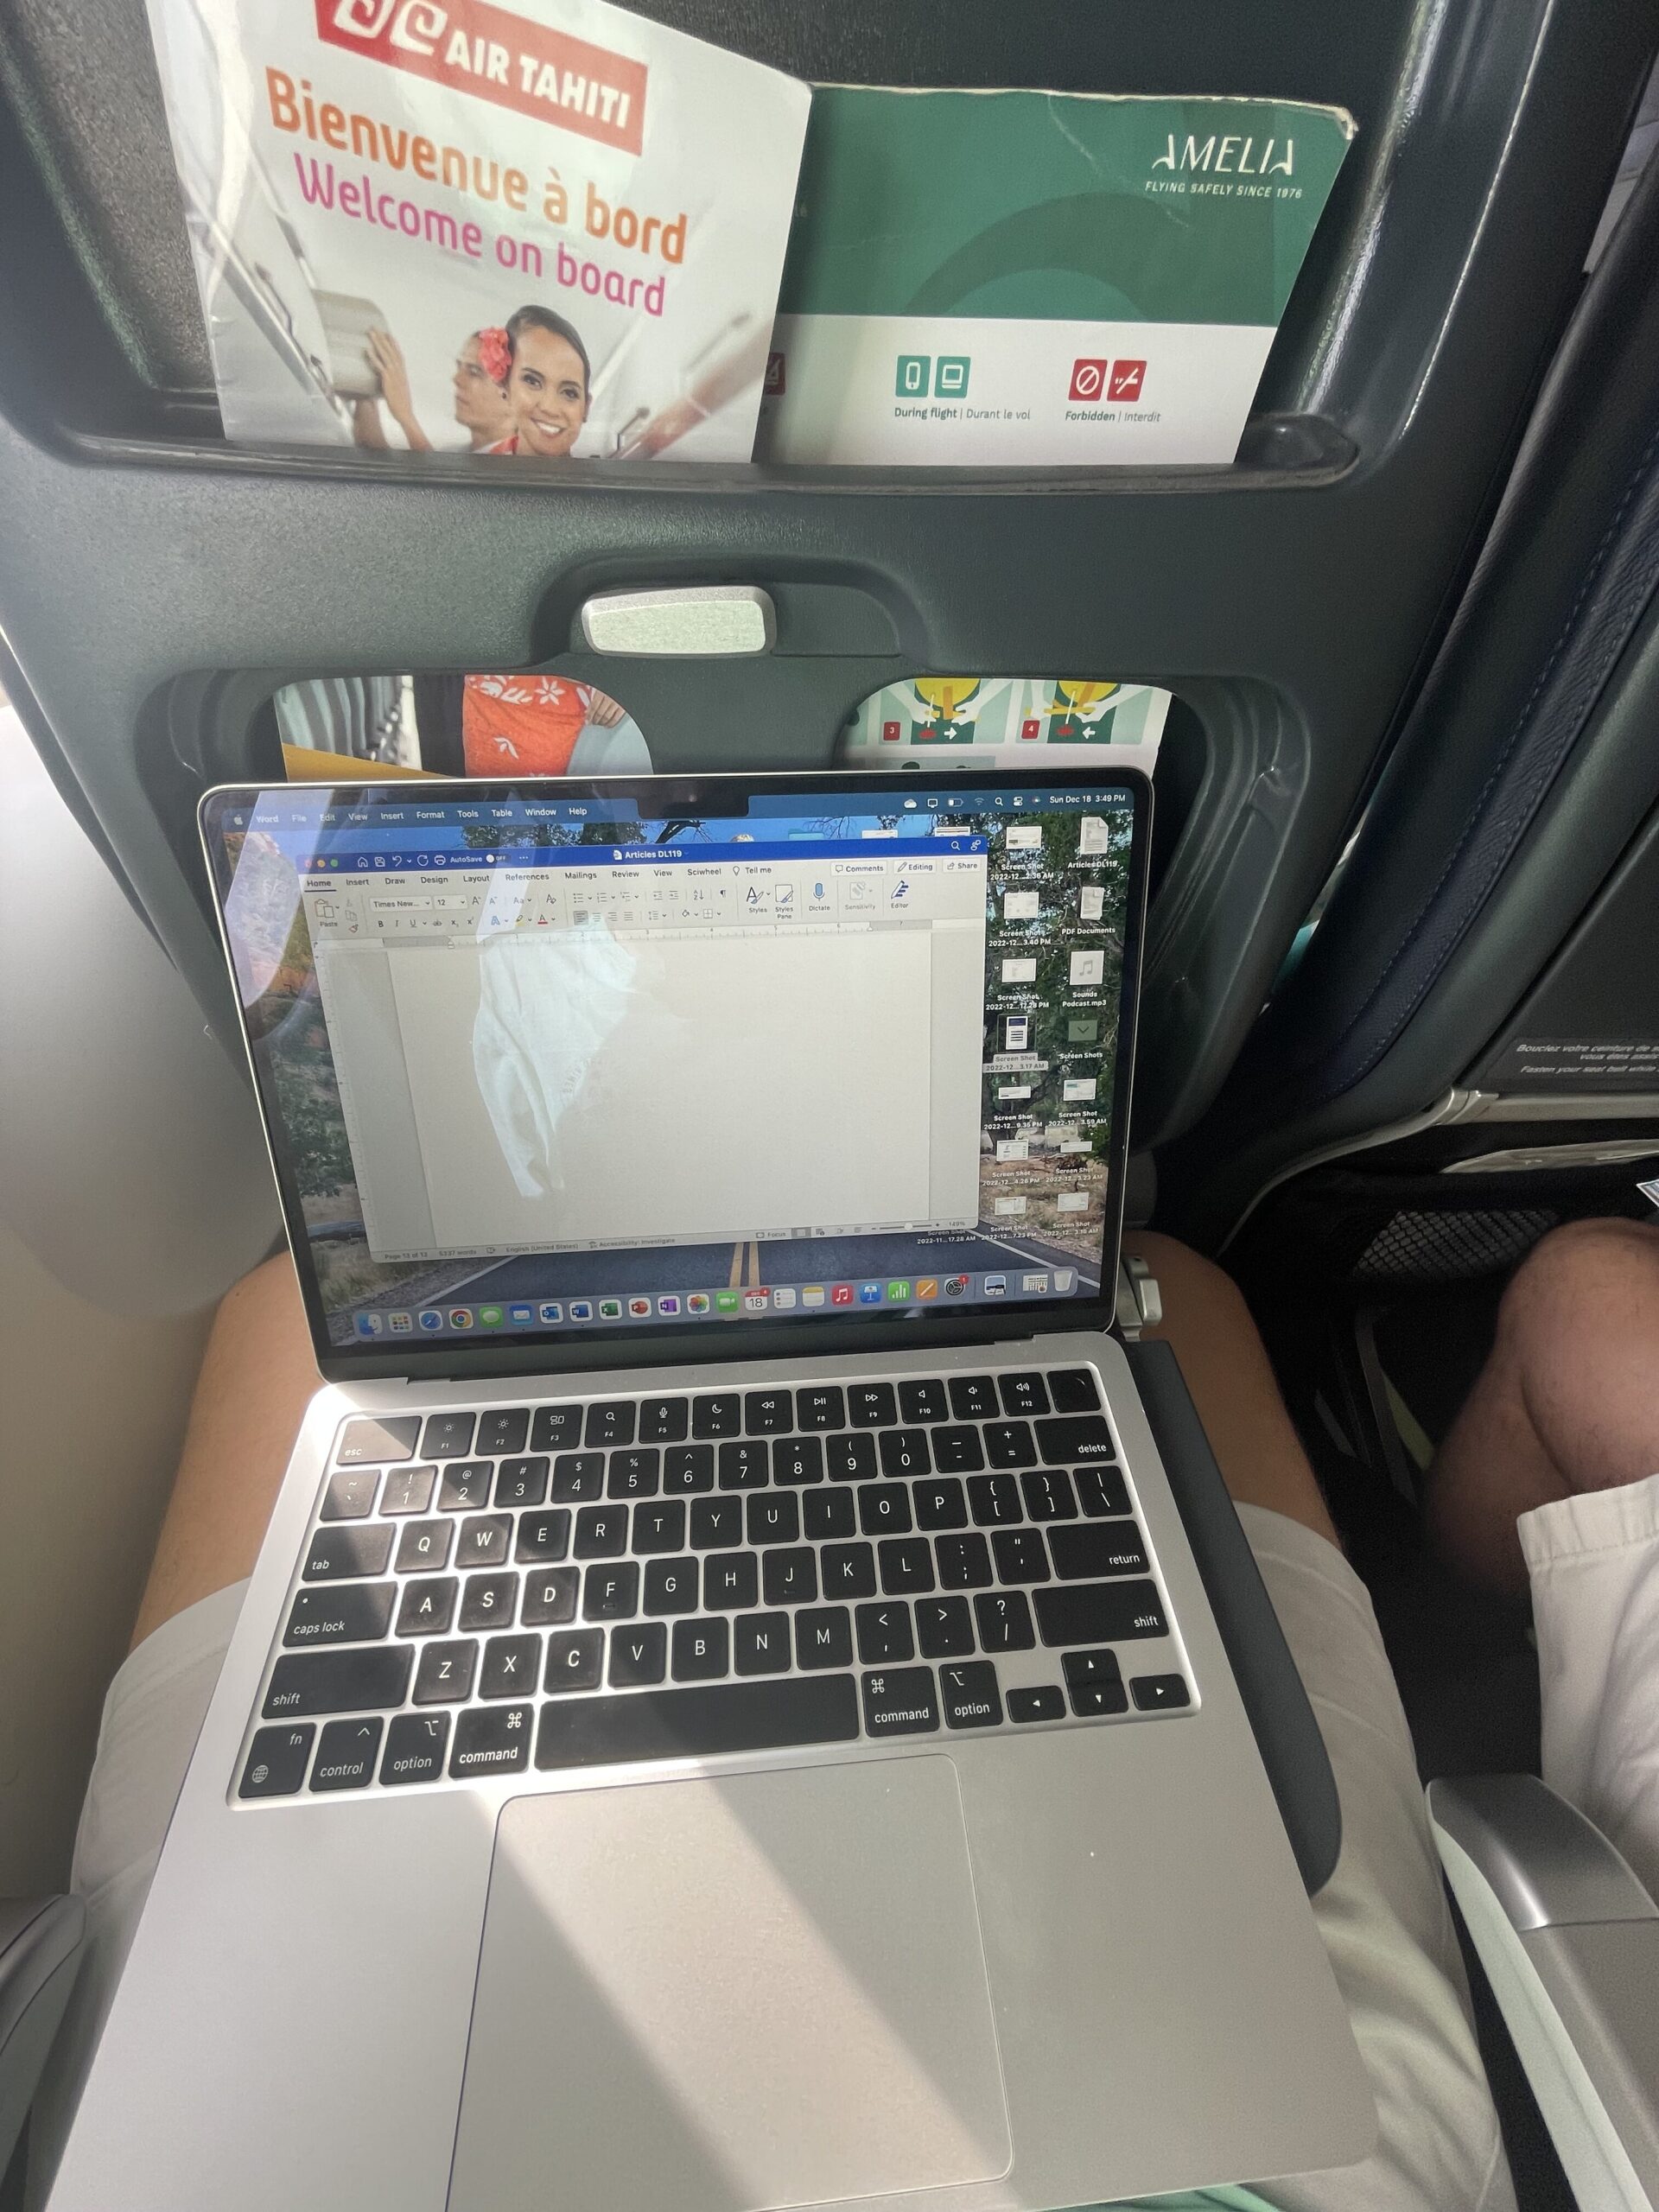 a laptop on a person's lap